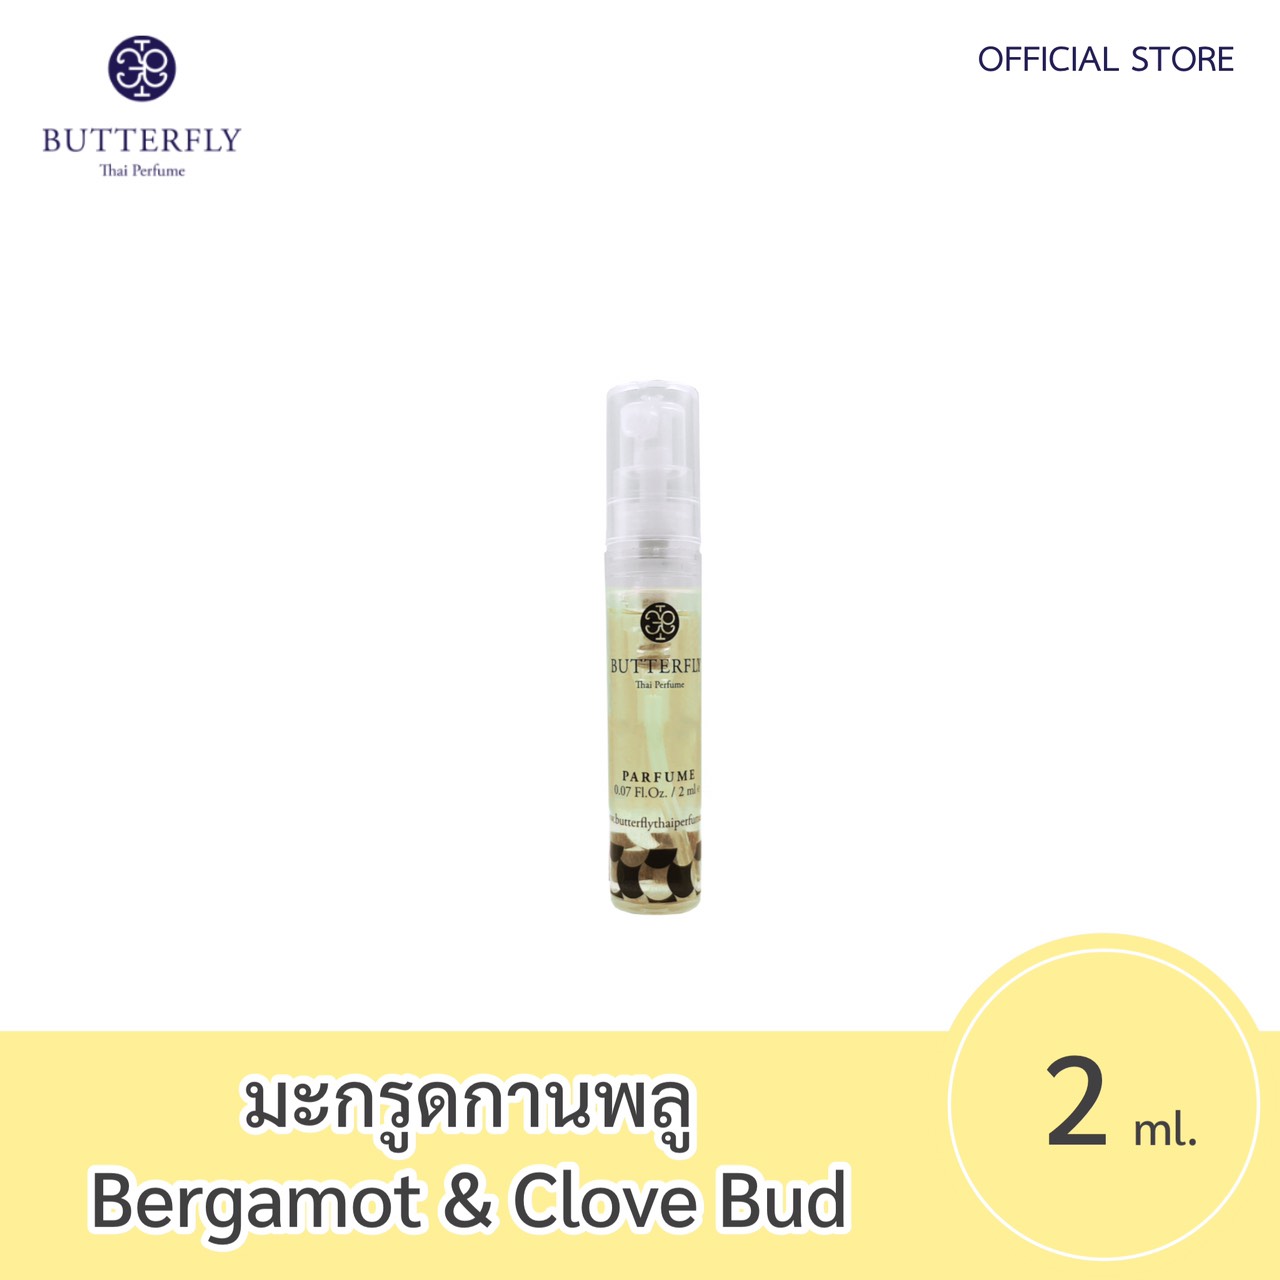 Butterfly Thai Perfume - น้ำหอมบัตเตอร์ฟลาย ไทย เพอร์ฟูม  ขนาดทดลอง 2ml.  กลิ่น มะกรูดกานพลูปริมาณ (มล.) 2